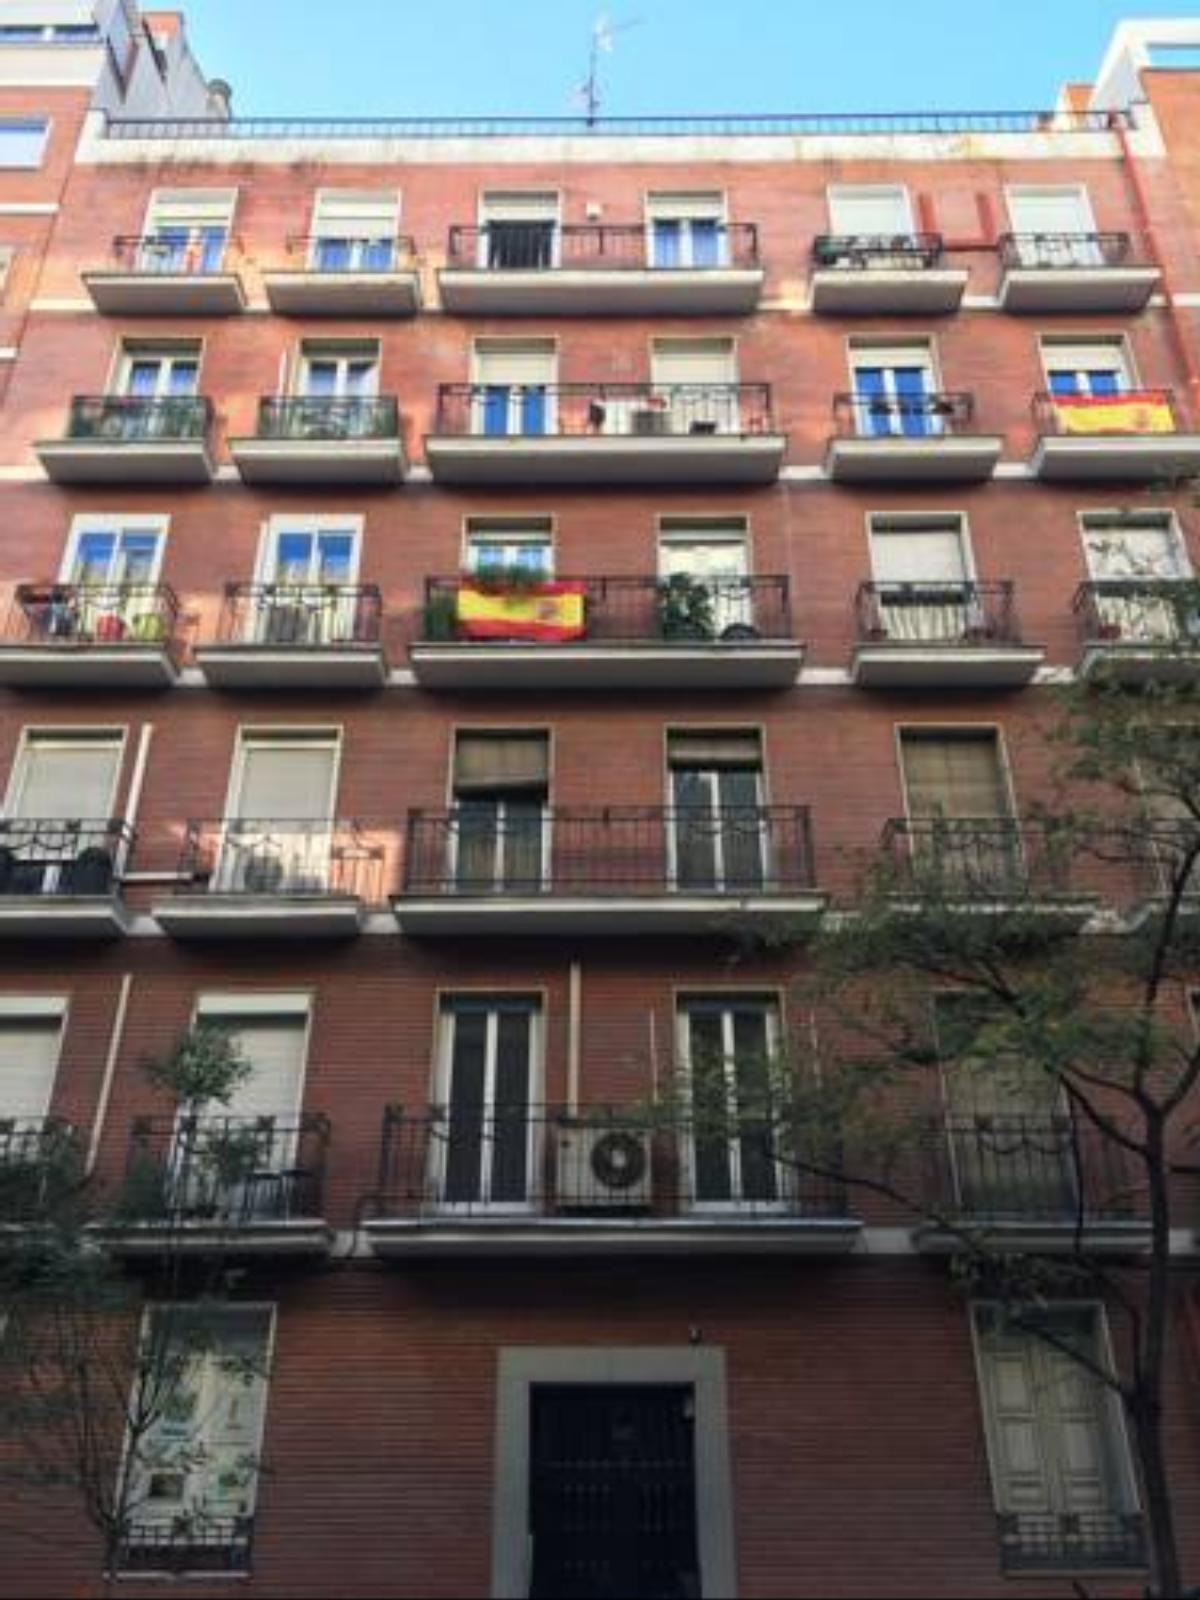 Piso Castelló en Barrio de Salamanca Hotel Madrid Spain